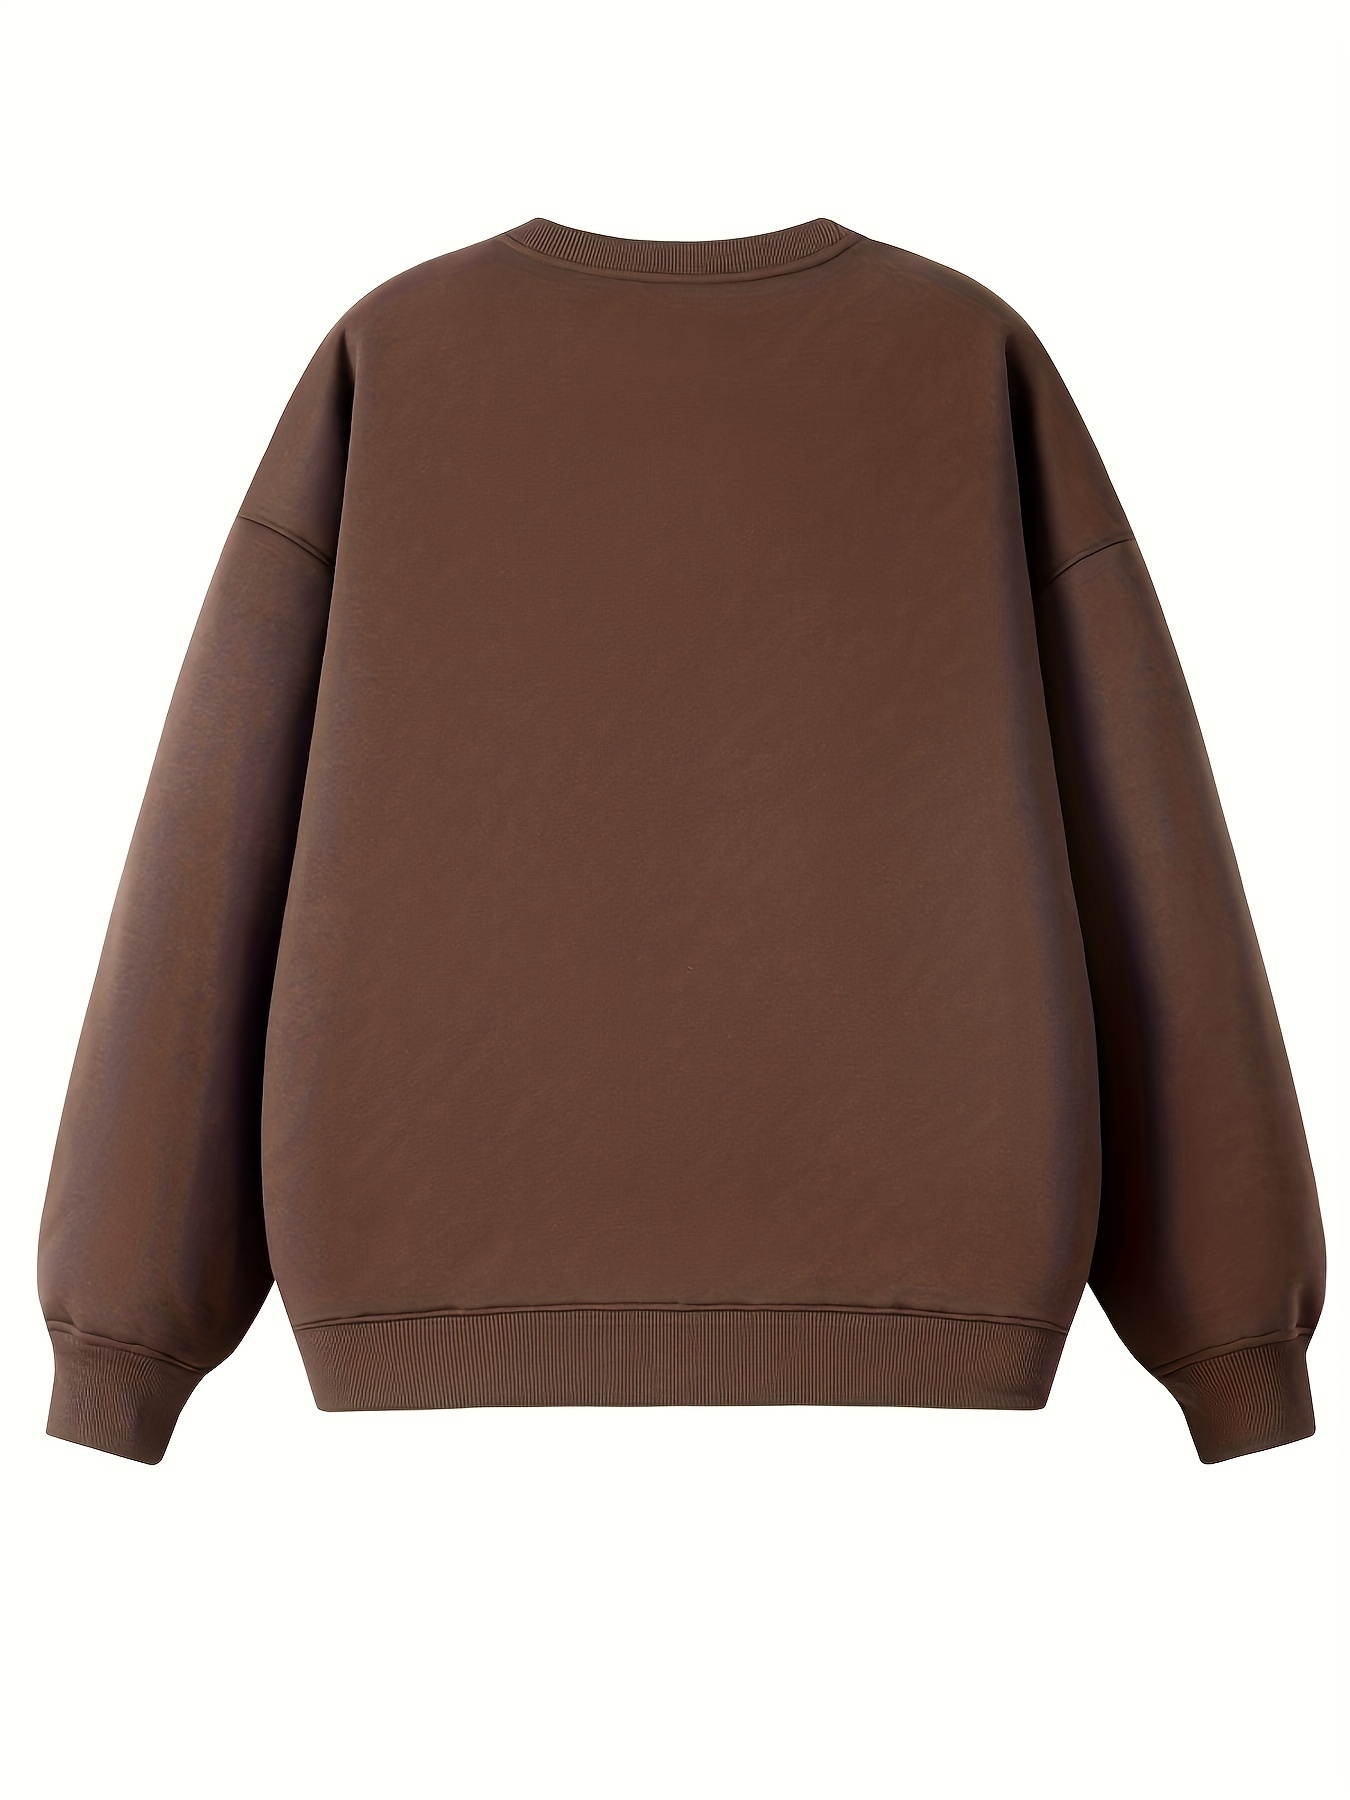 Brown Crewneck Sweatshirts for Men